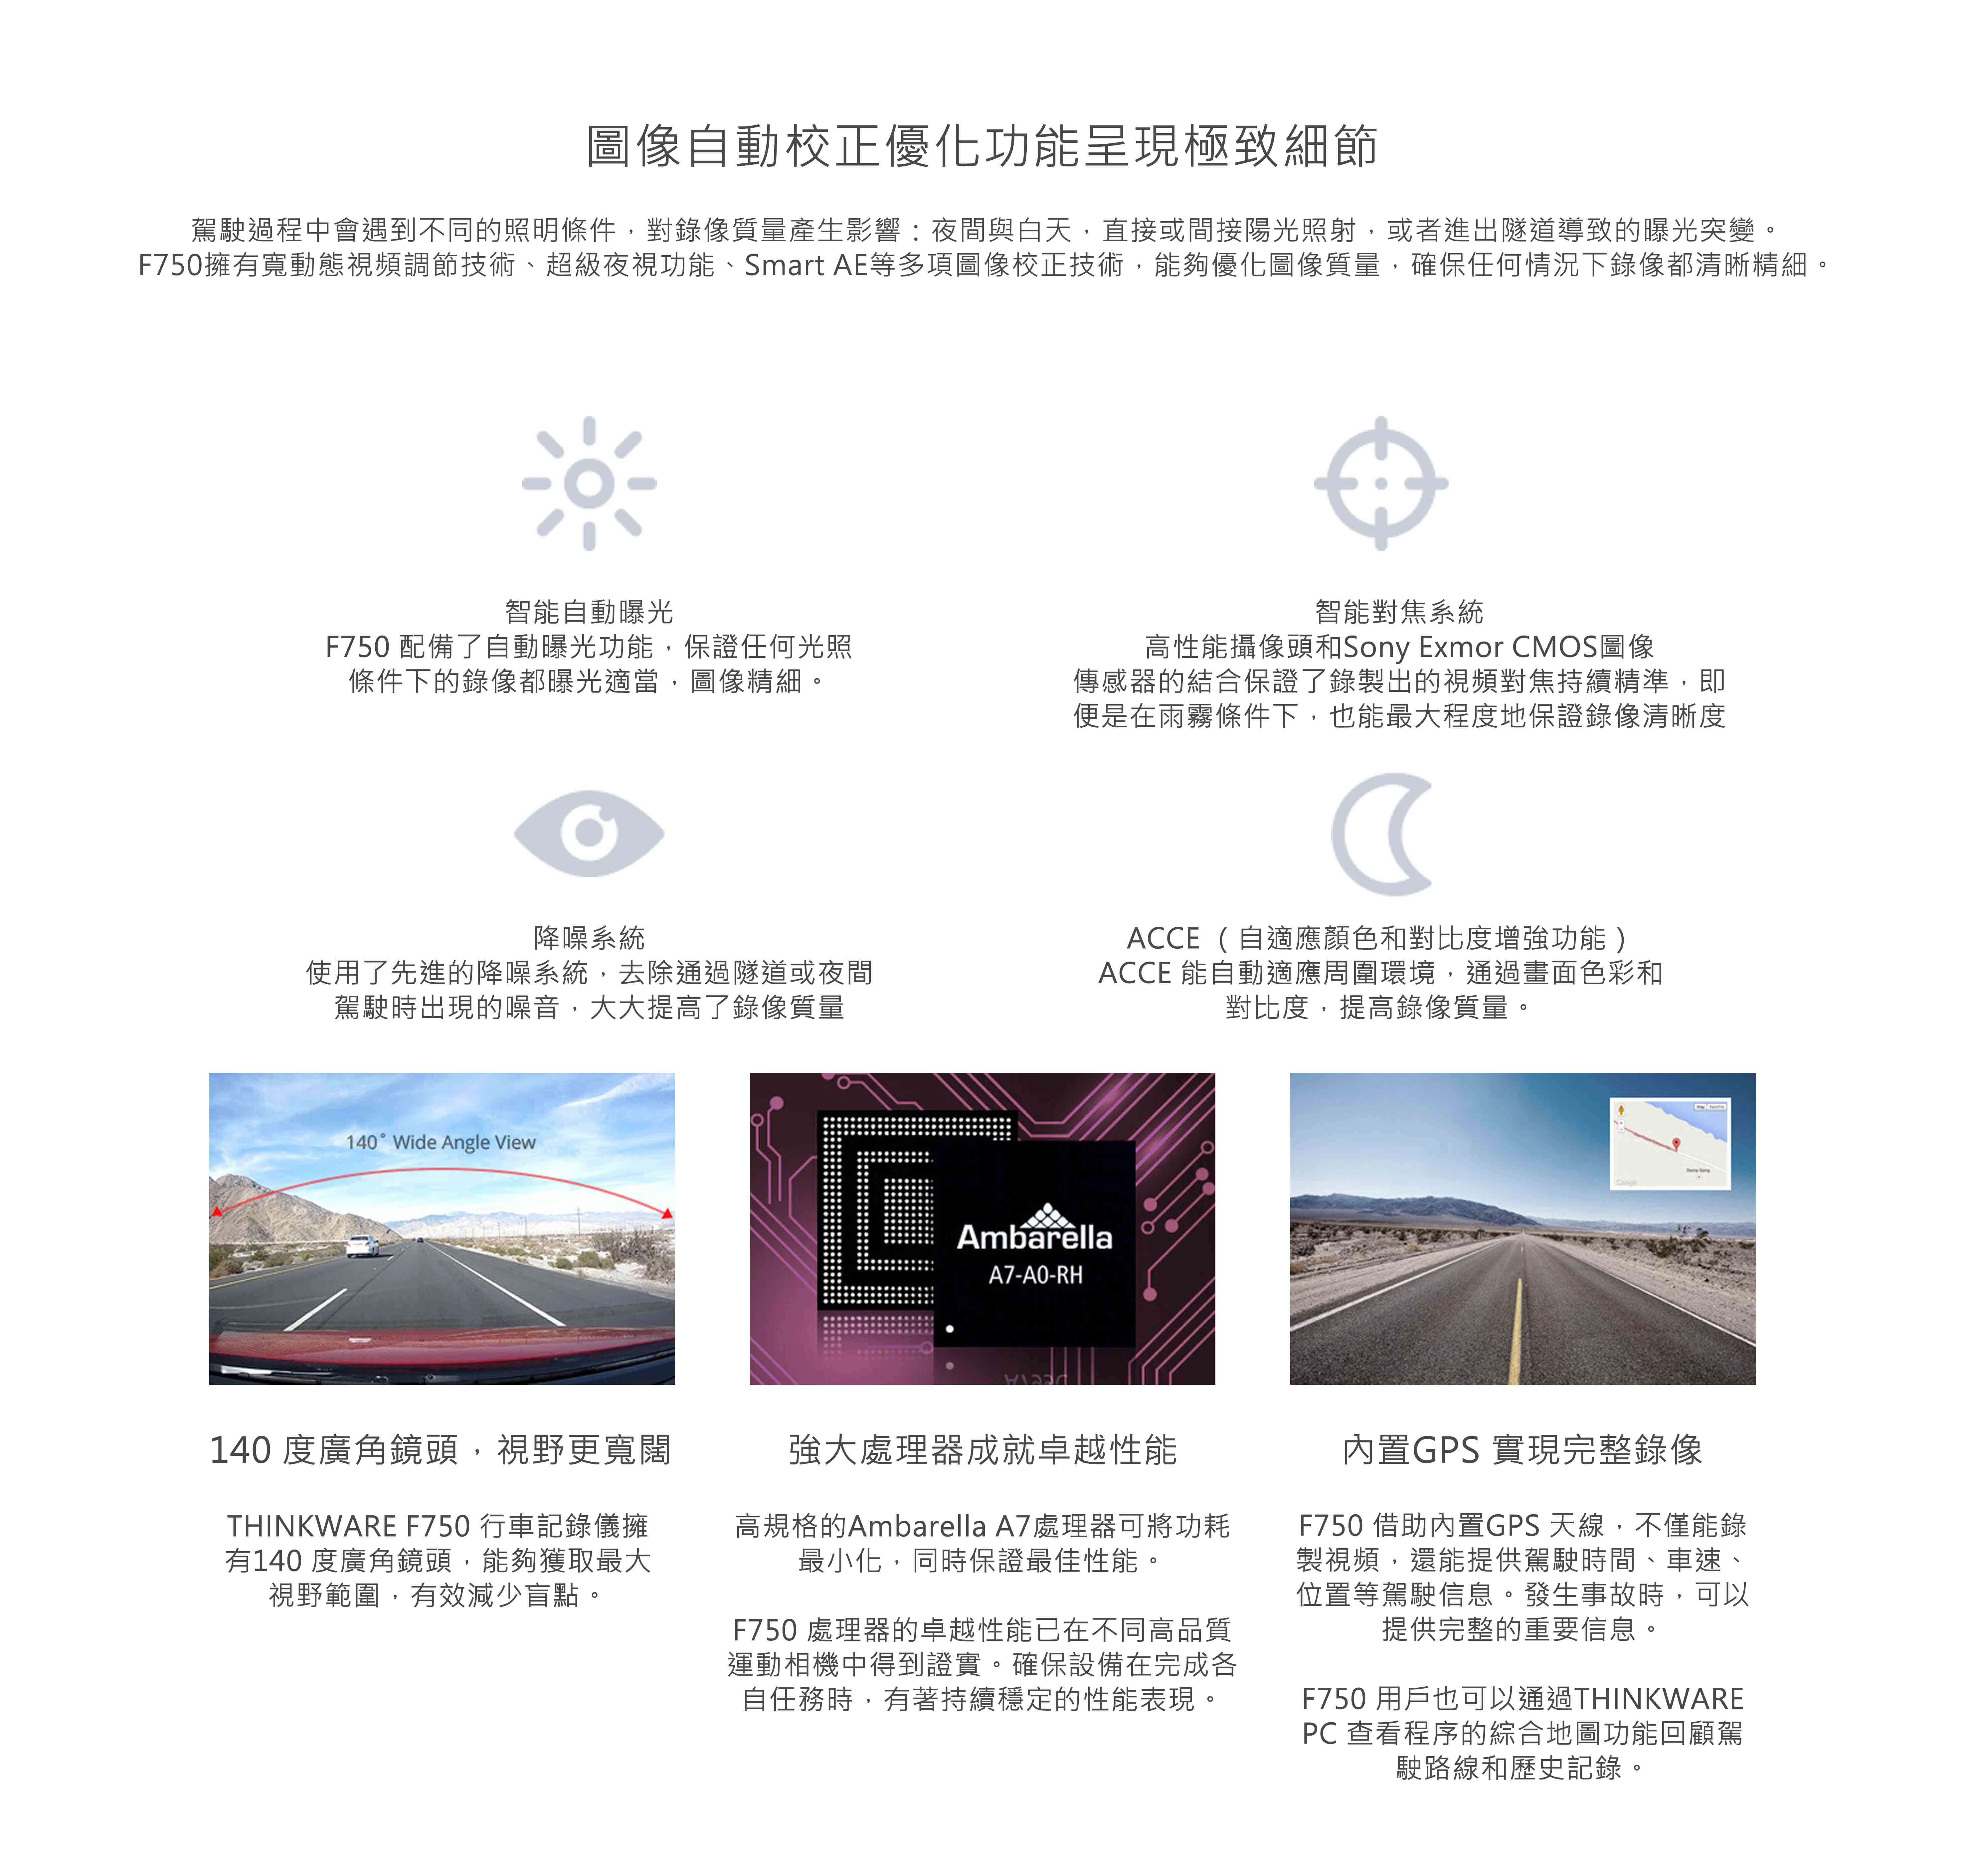 THINKWARE F750 1080P高清行車紀錄儀 功能介紹 | 內置WIFI及GPS- Outlet Express HK生活百貨城